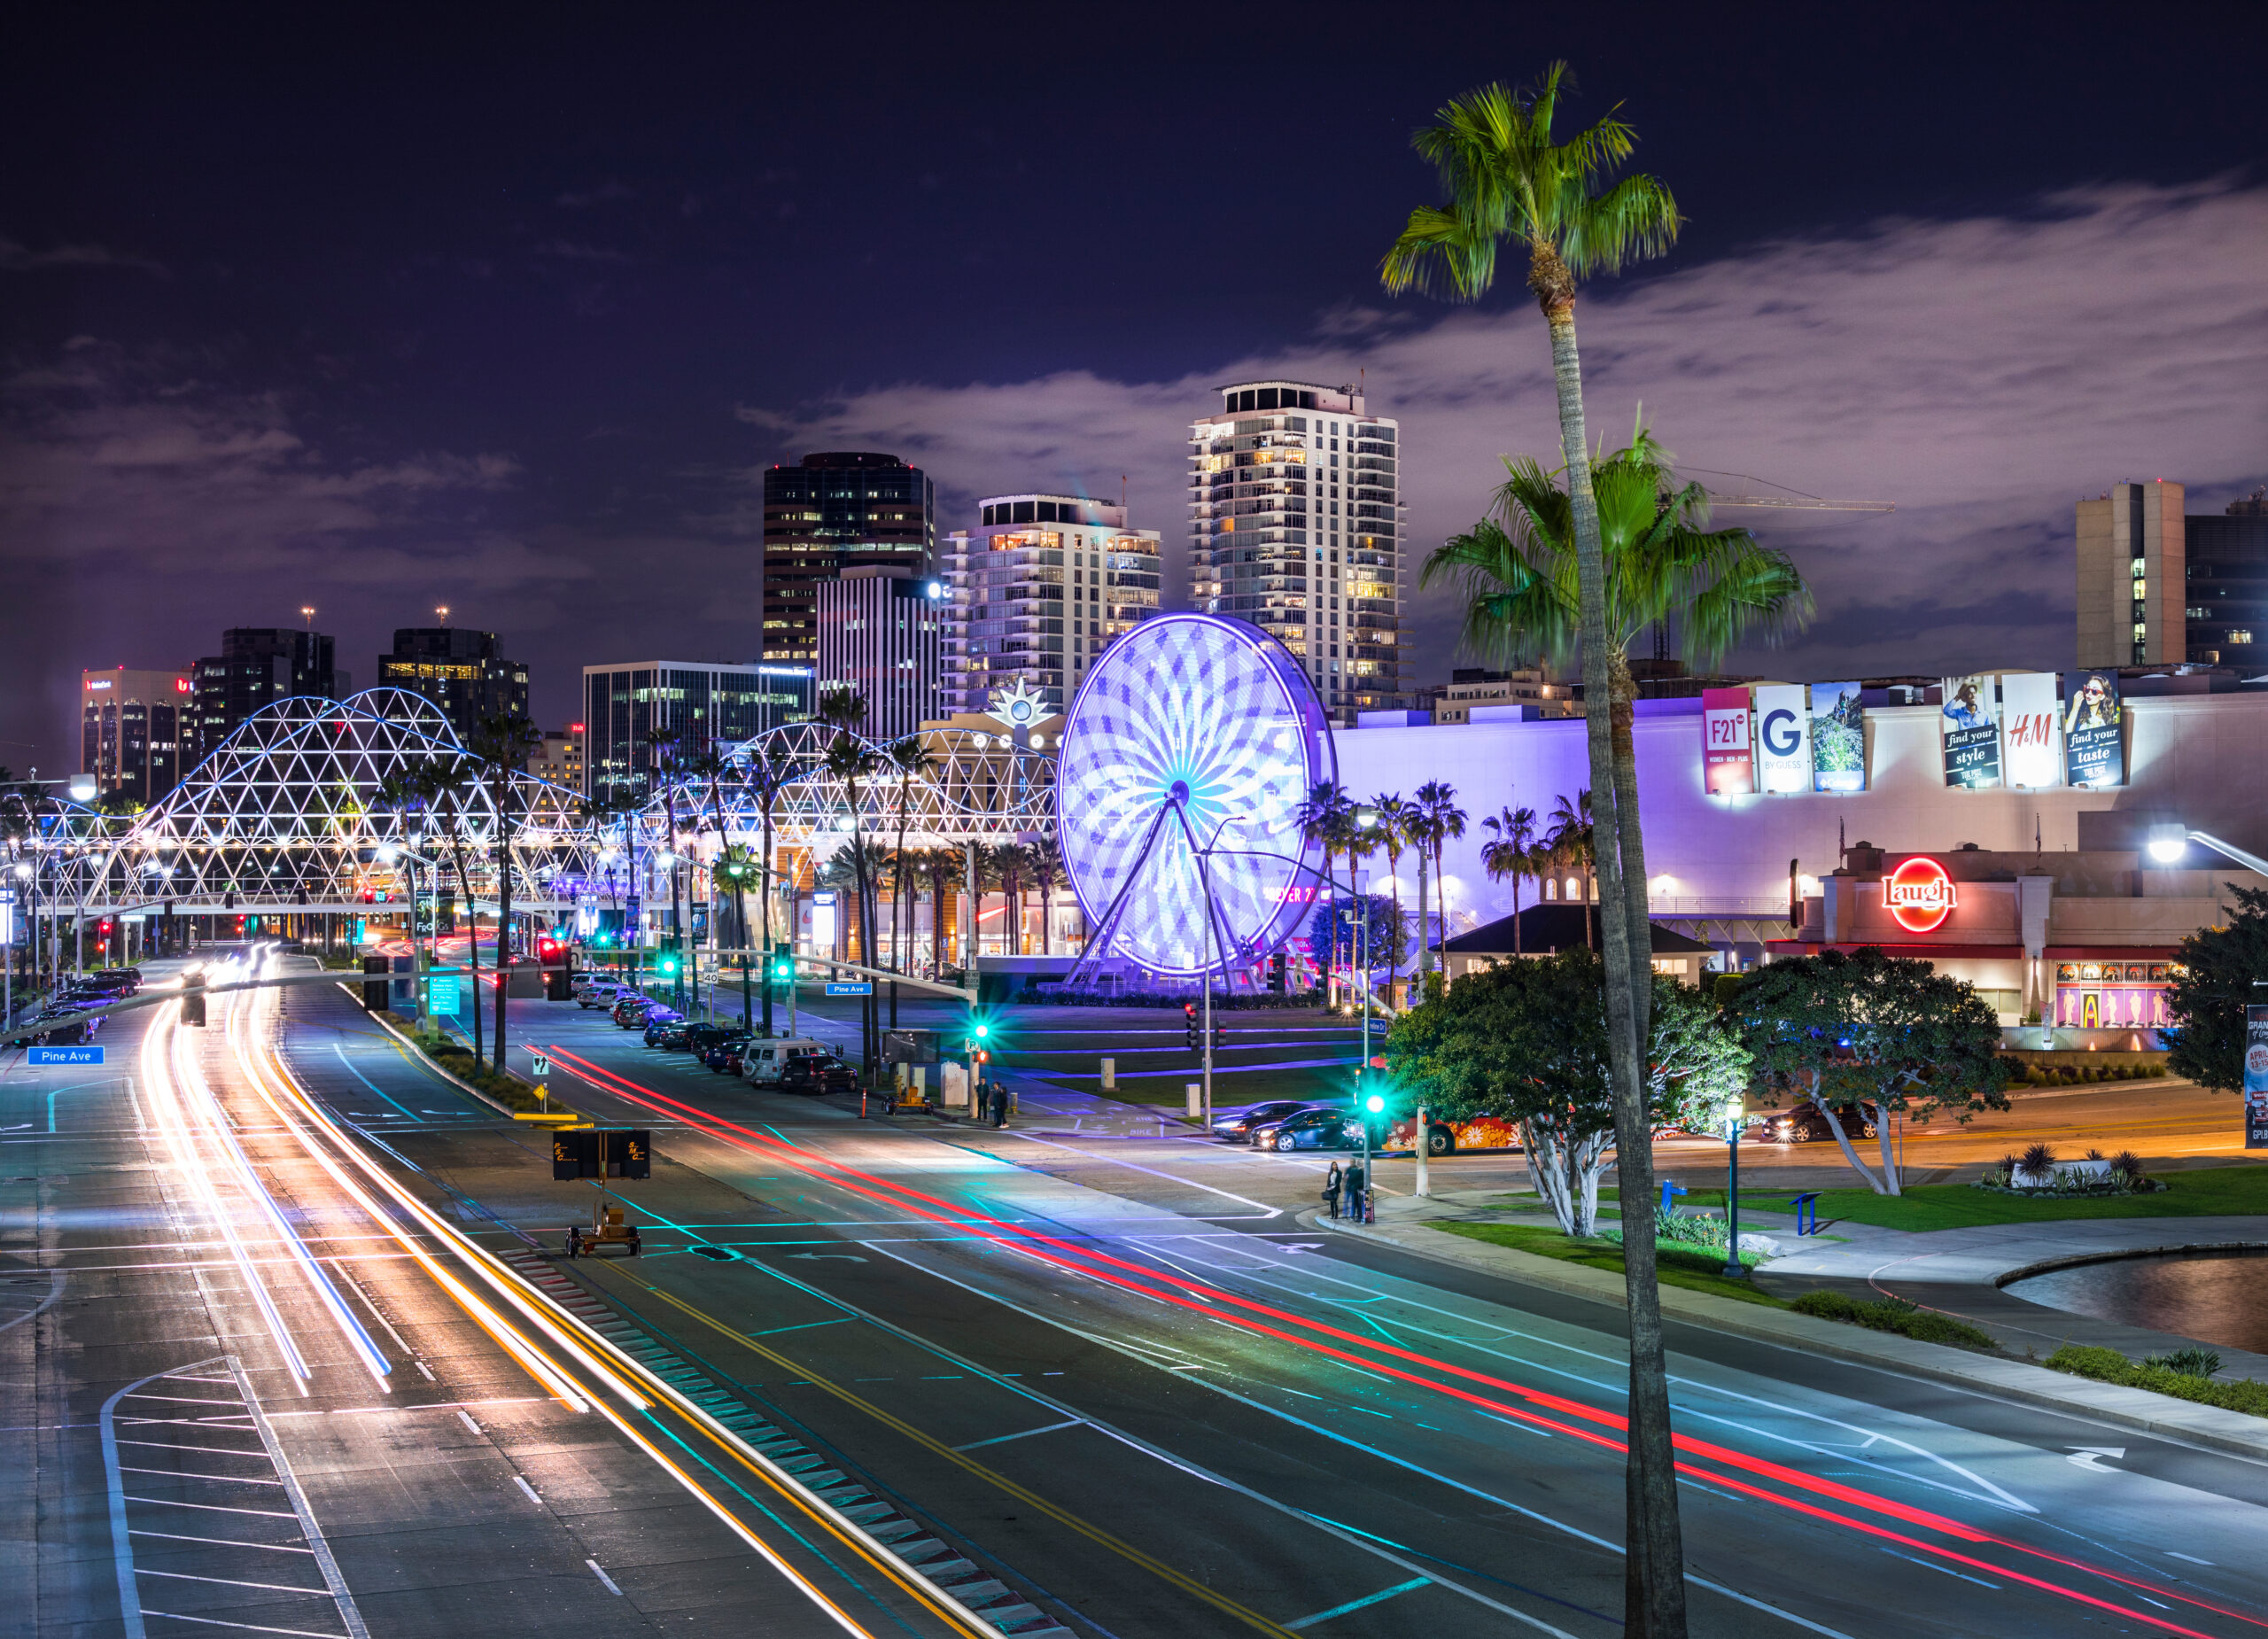 The Long Beach, California, Pike at night.